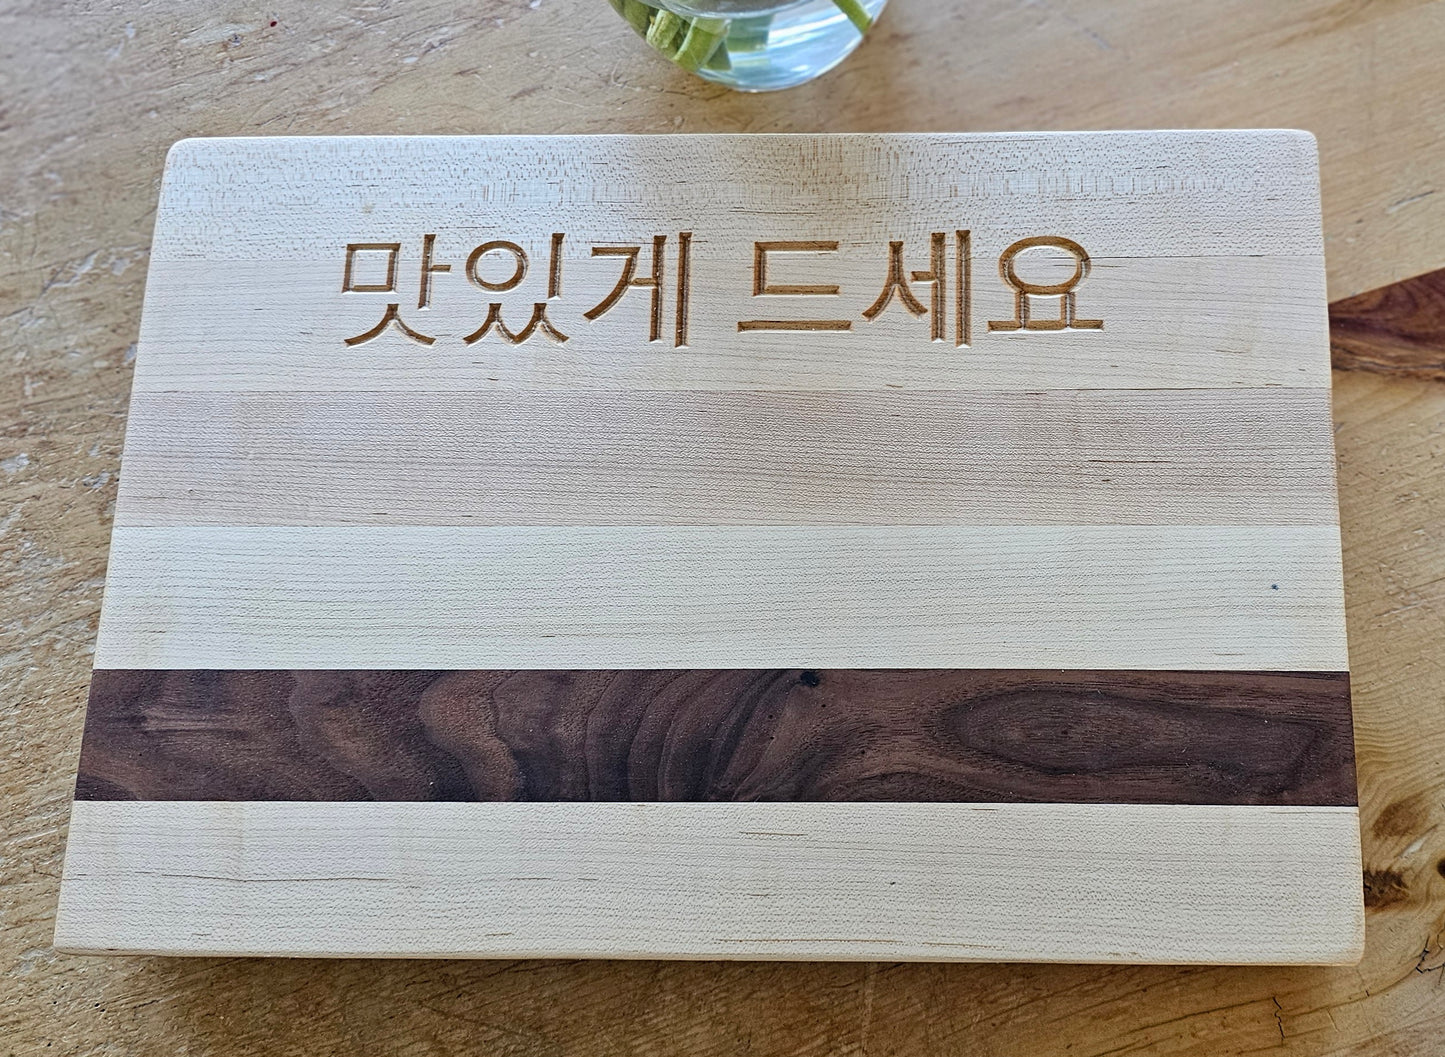 Doodleware Cutting Boards - Bon Appetit in Korean (한국어)